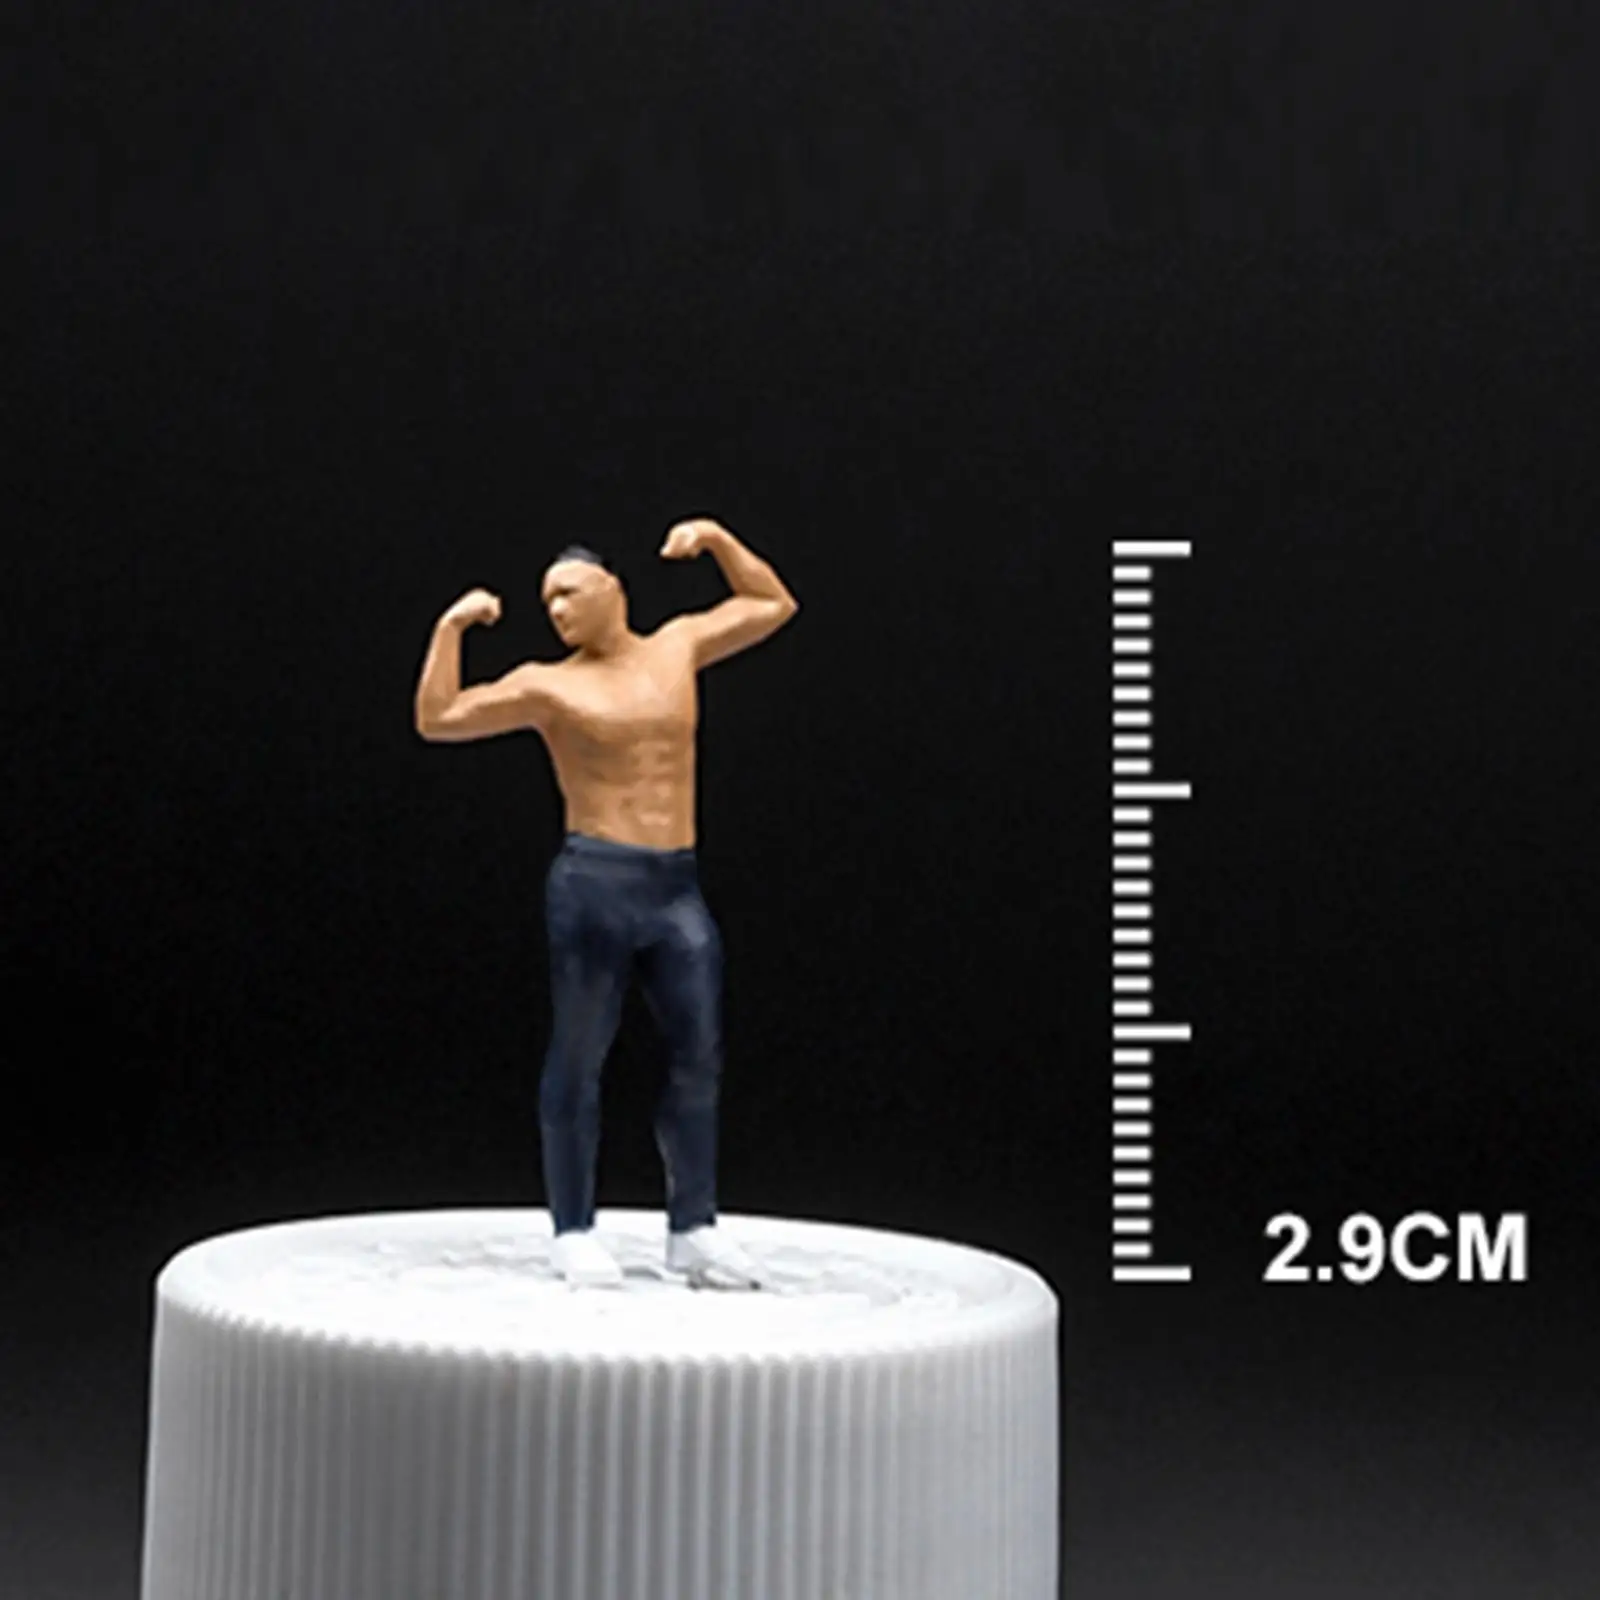 1/64 Scale Handmade Miniature Figurines Model Accessories for Bodybuilder